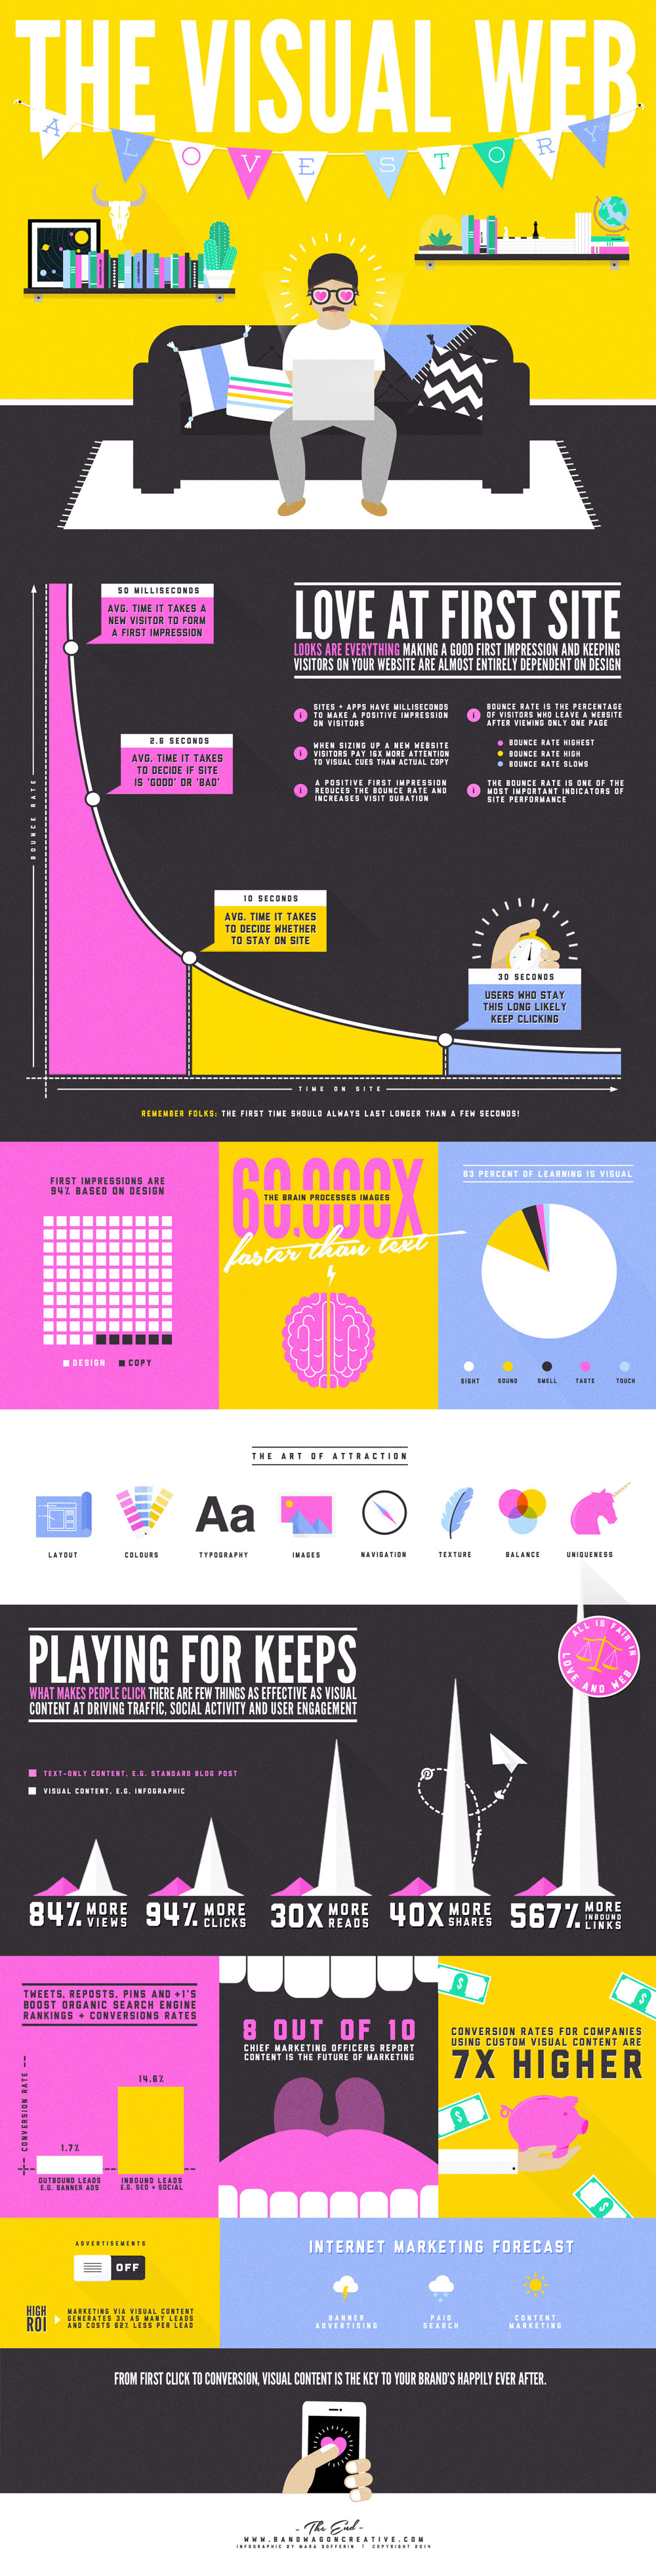 Visual_Web_Infographic_Large